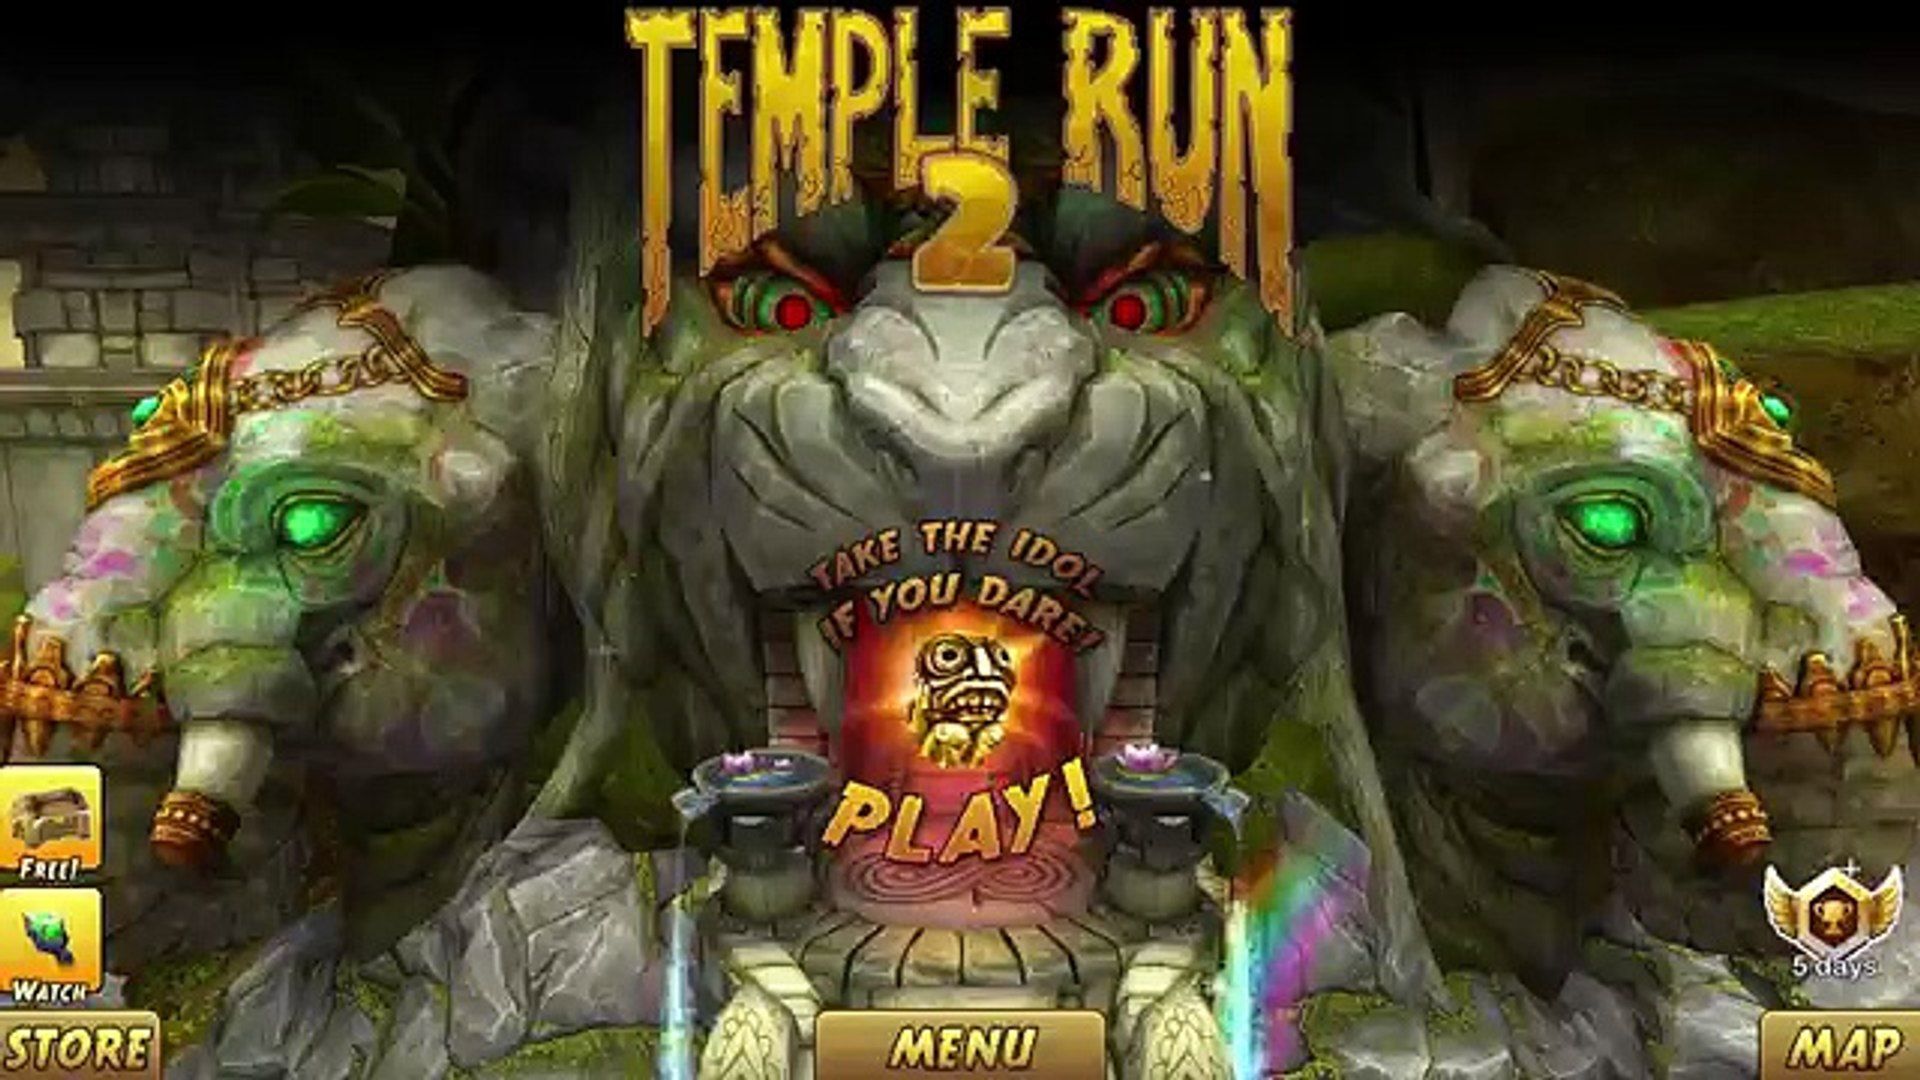 Temple Run 2 All 5 Maps Play Lost Jungle. Blazing Sand. Spooky